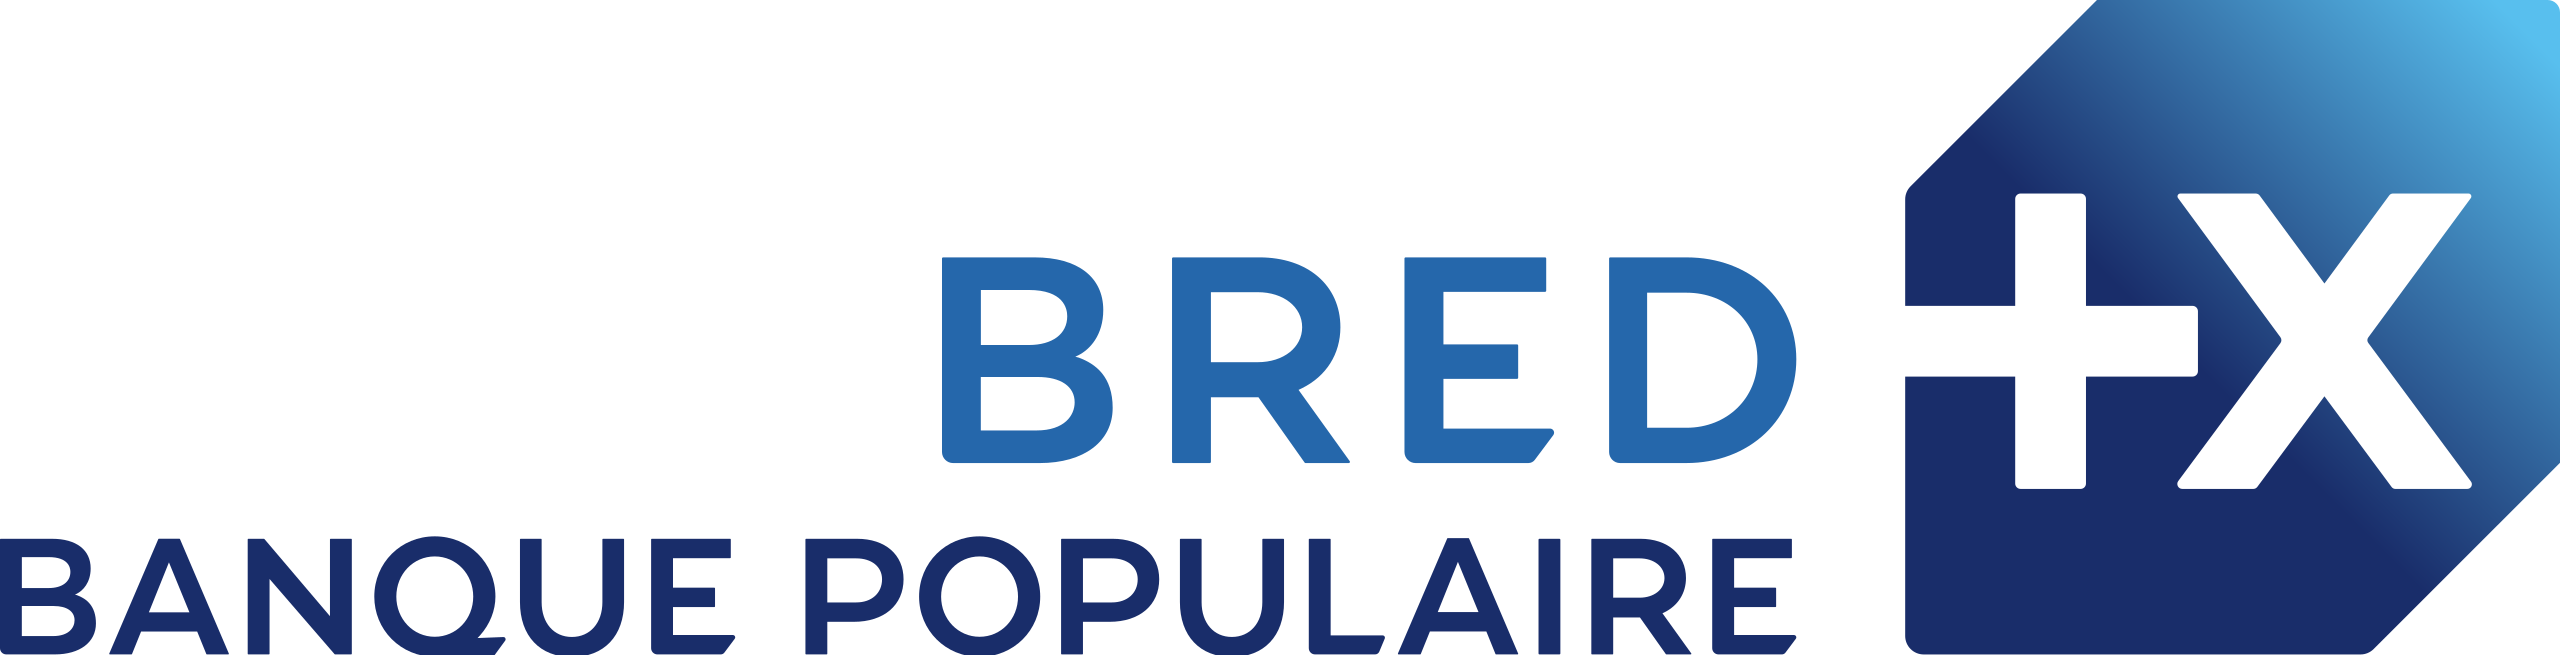 bred logo